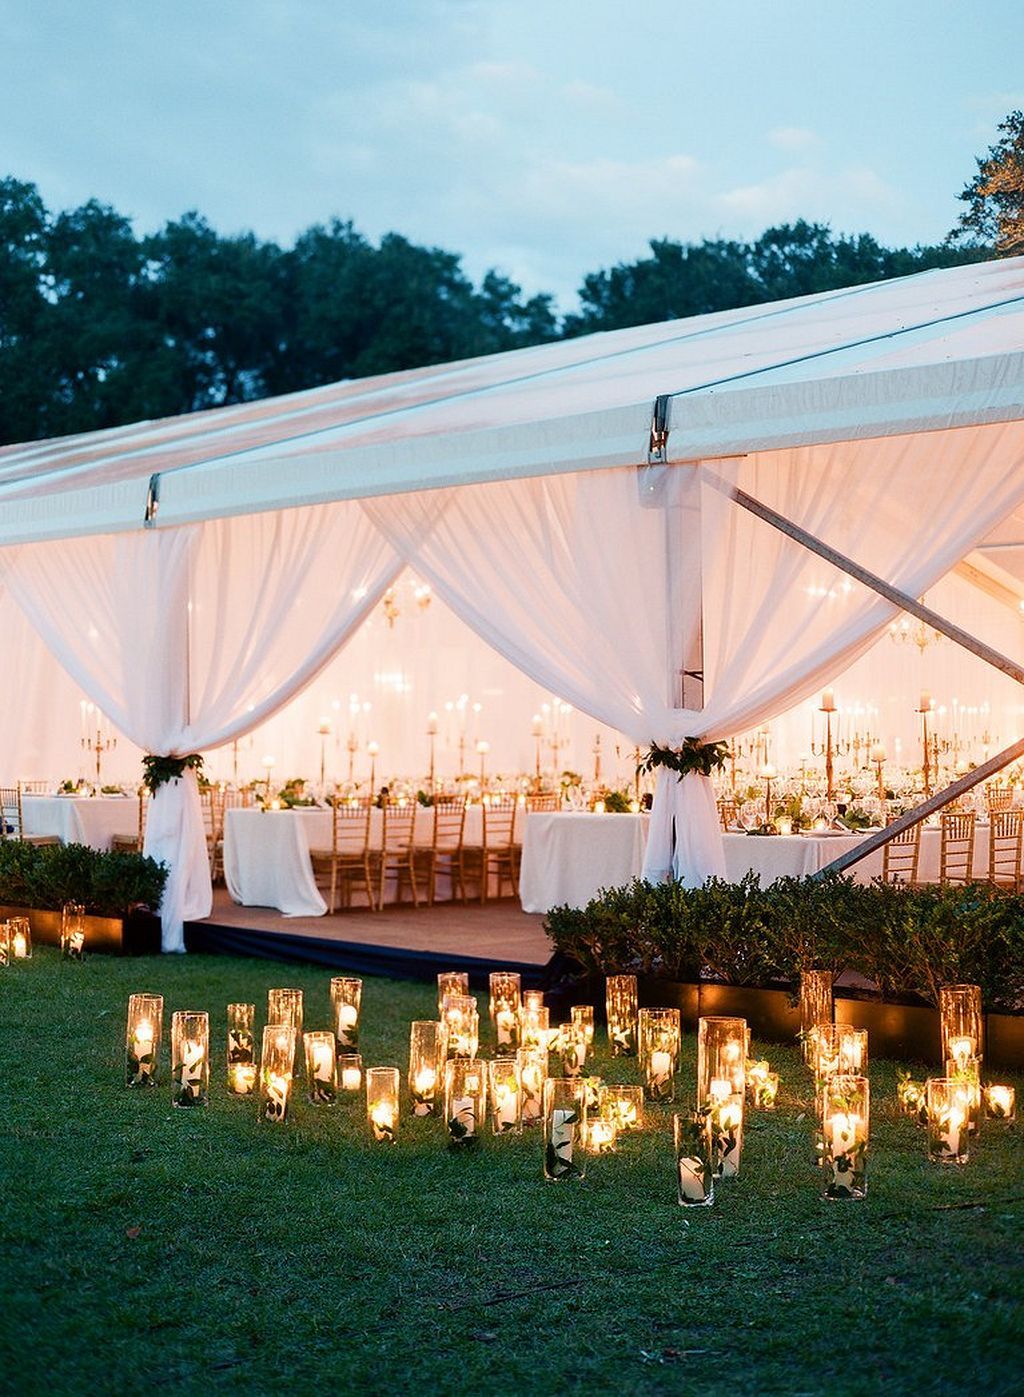 Amazing Outdoor Wedding Tents Ideas to Inspire